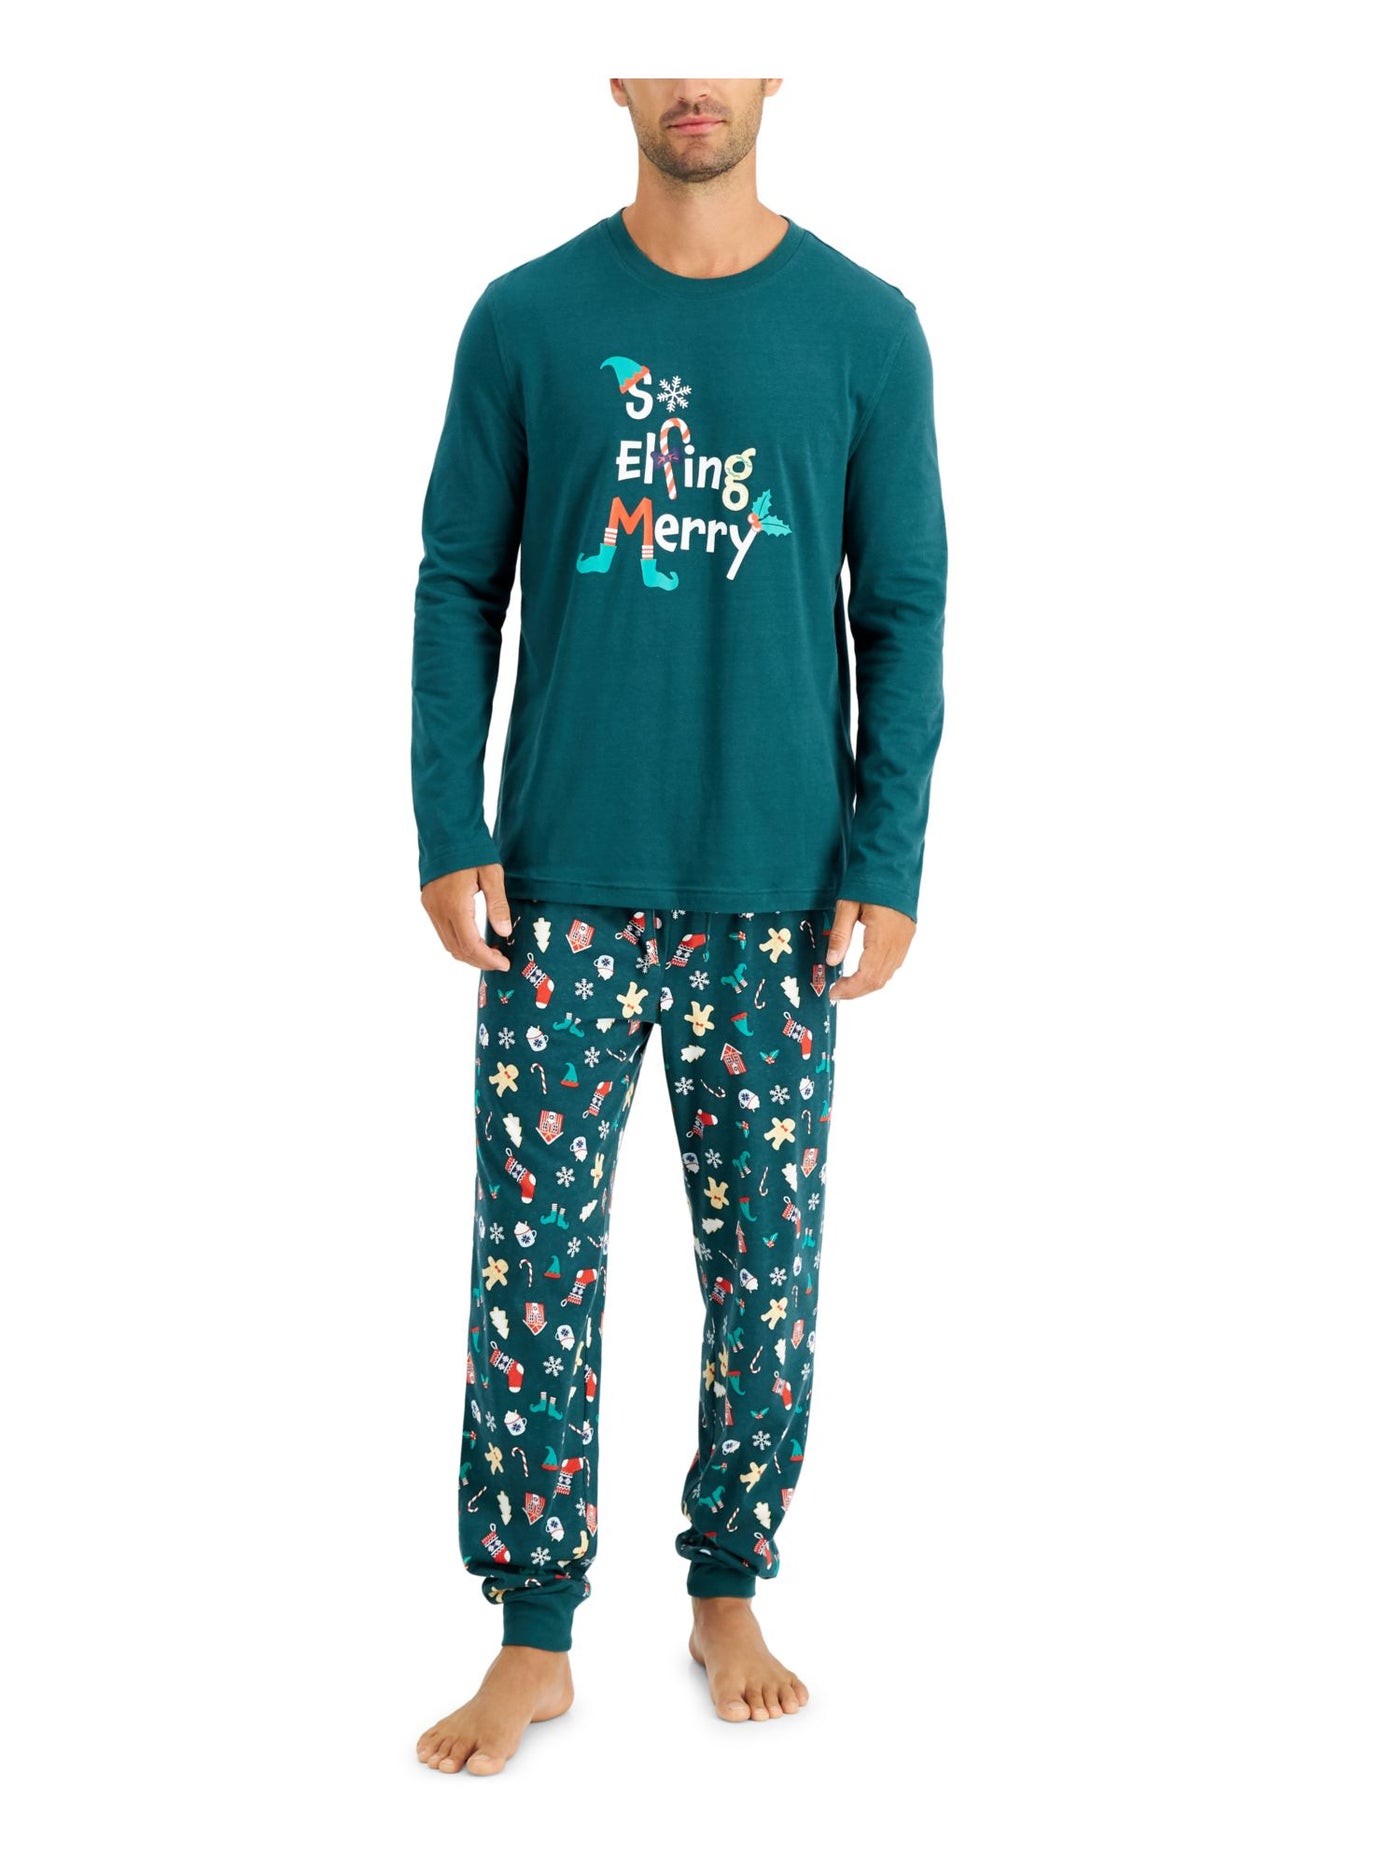 FAMILY PJs Mens Green Printed Elastic Band Long Sleeve T-Shirt Top Cuffed Pants Pajamas S